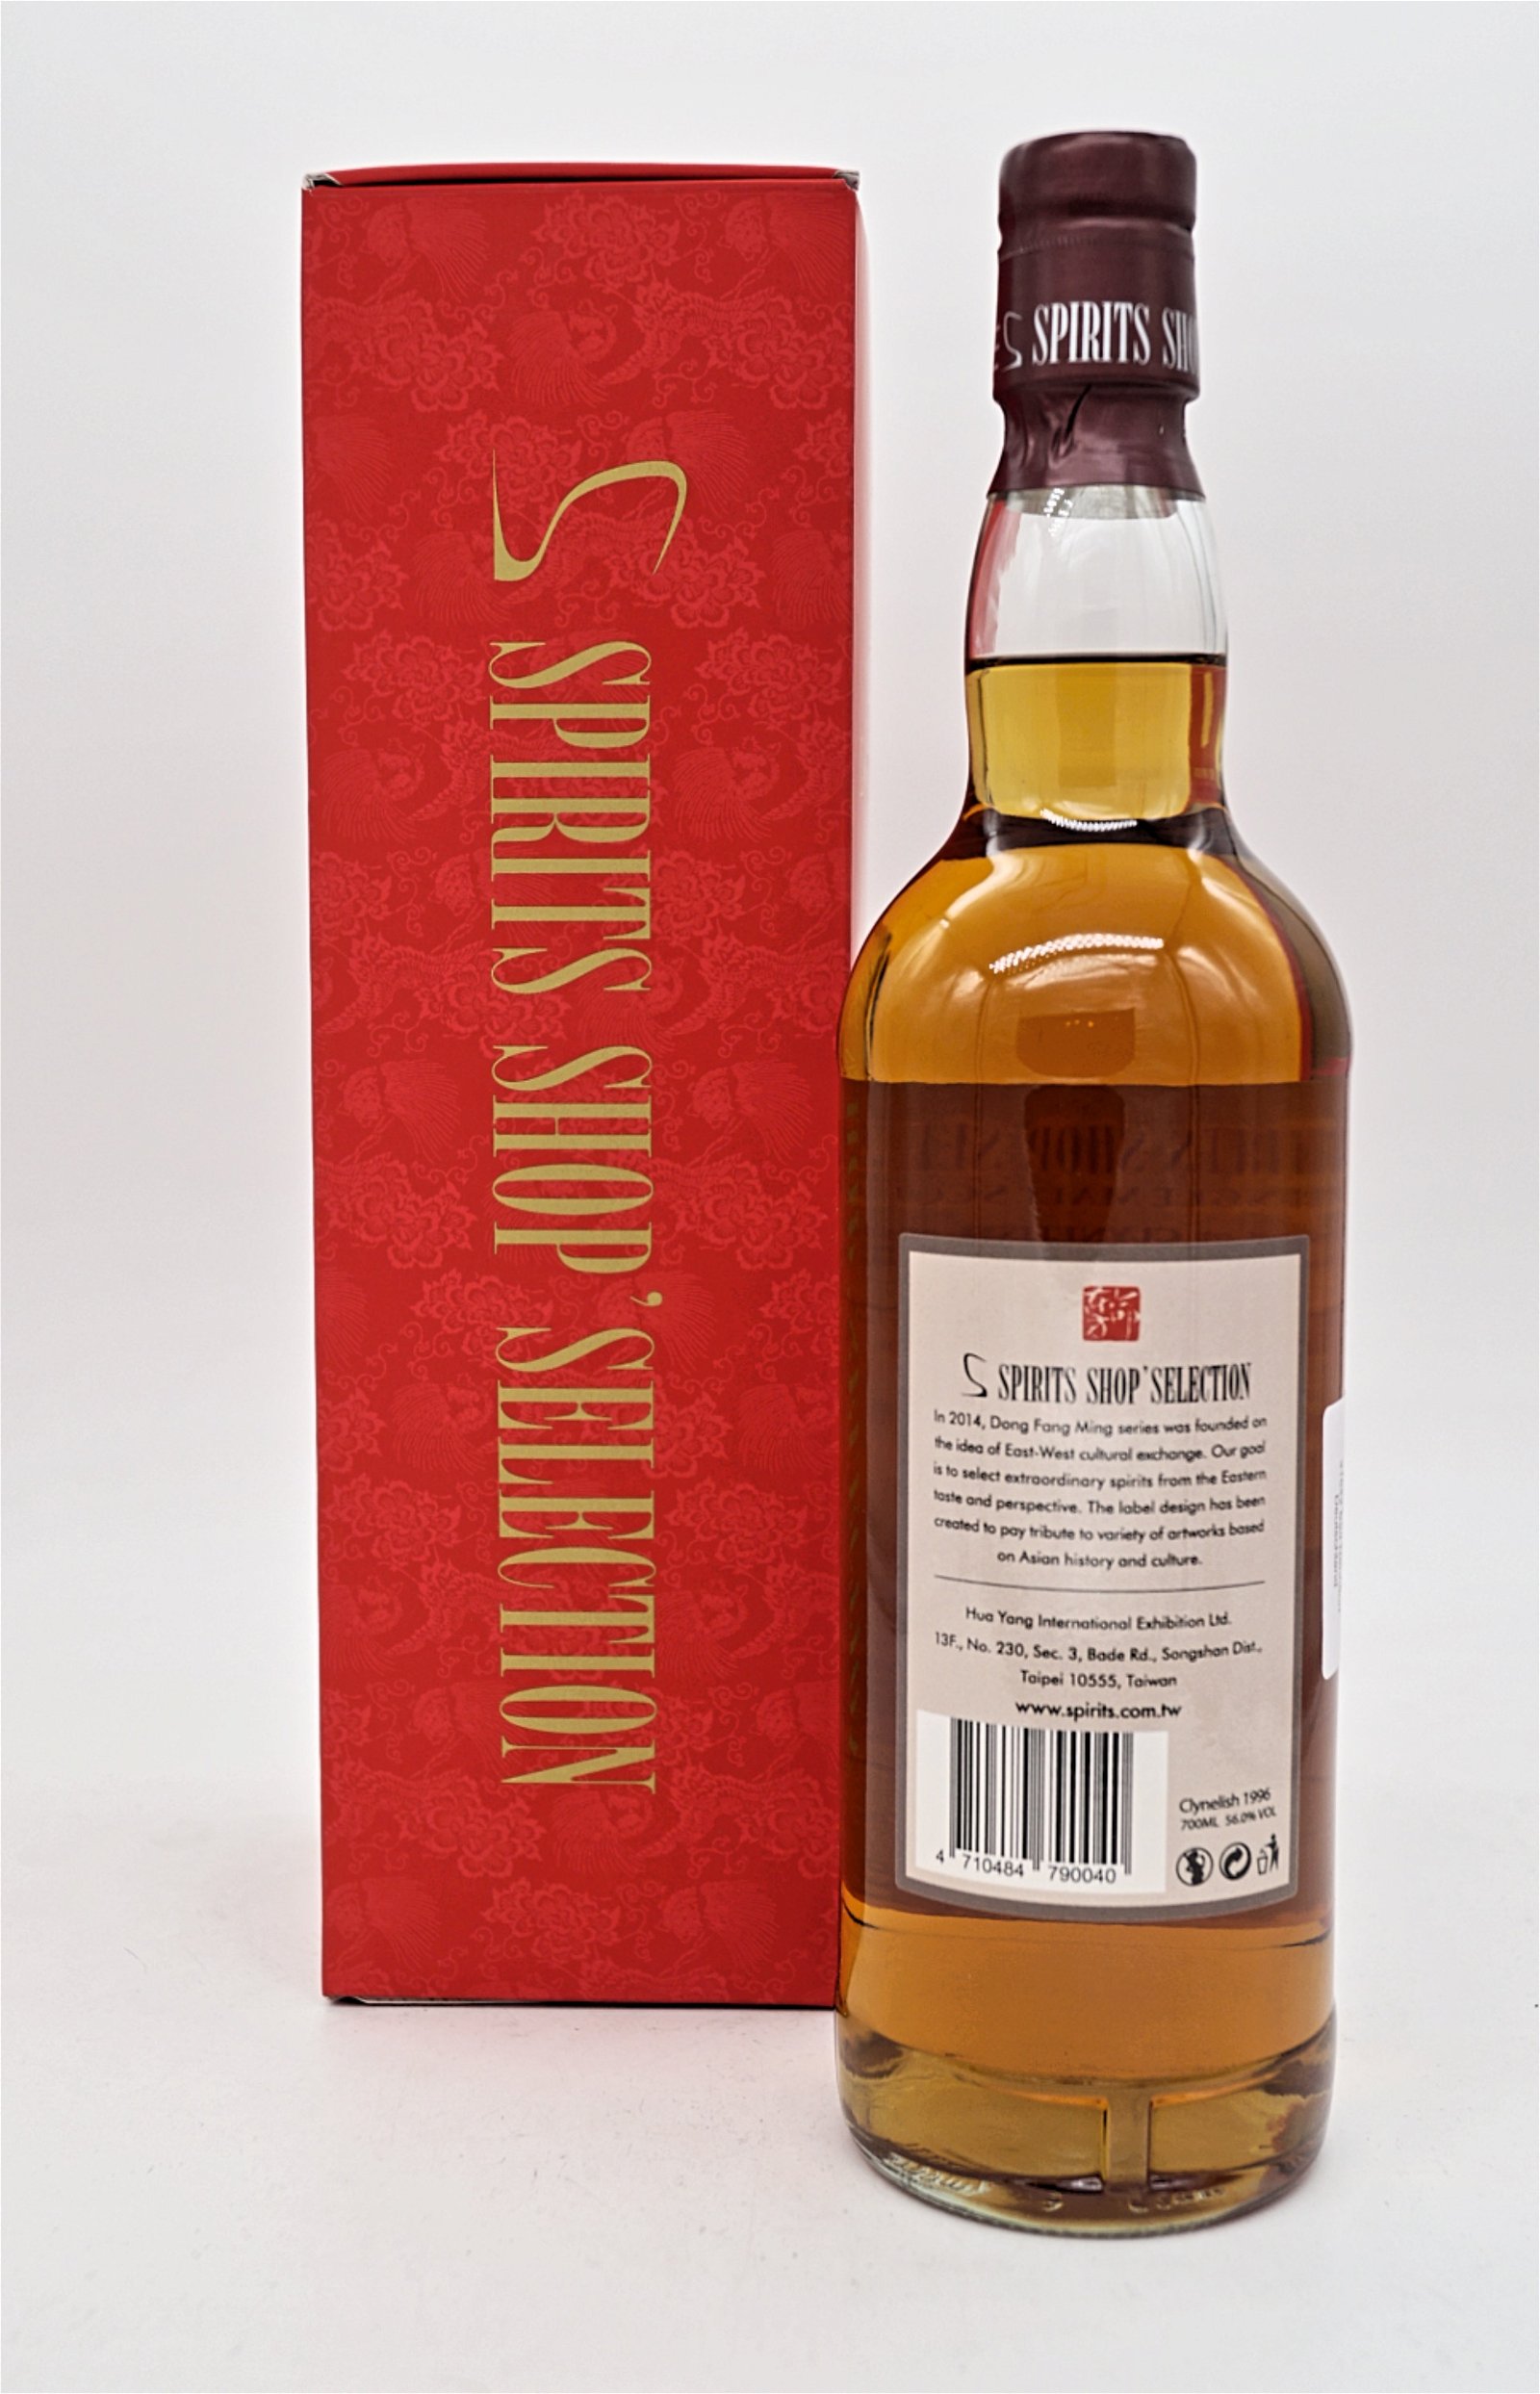 S-Spirits Shop Selection 21 Jahre Clynelish 1996/2018 Hogshead #11422 Single Cask Highland Single Malt Scotch Whisky